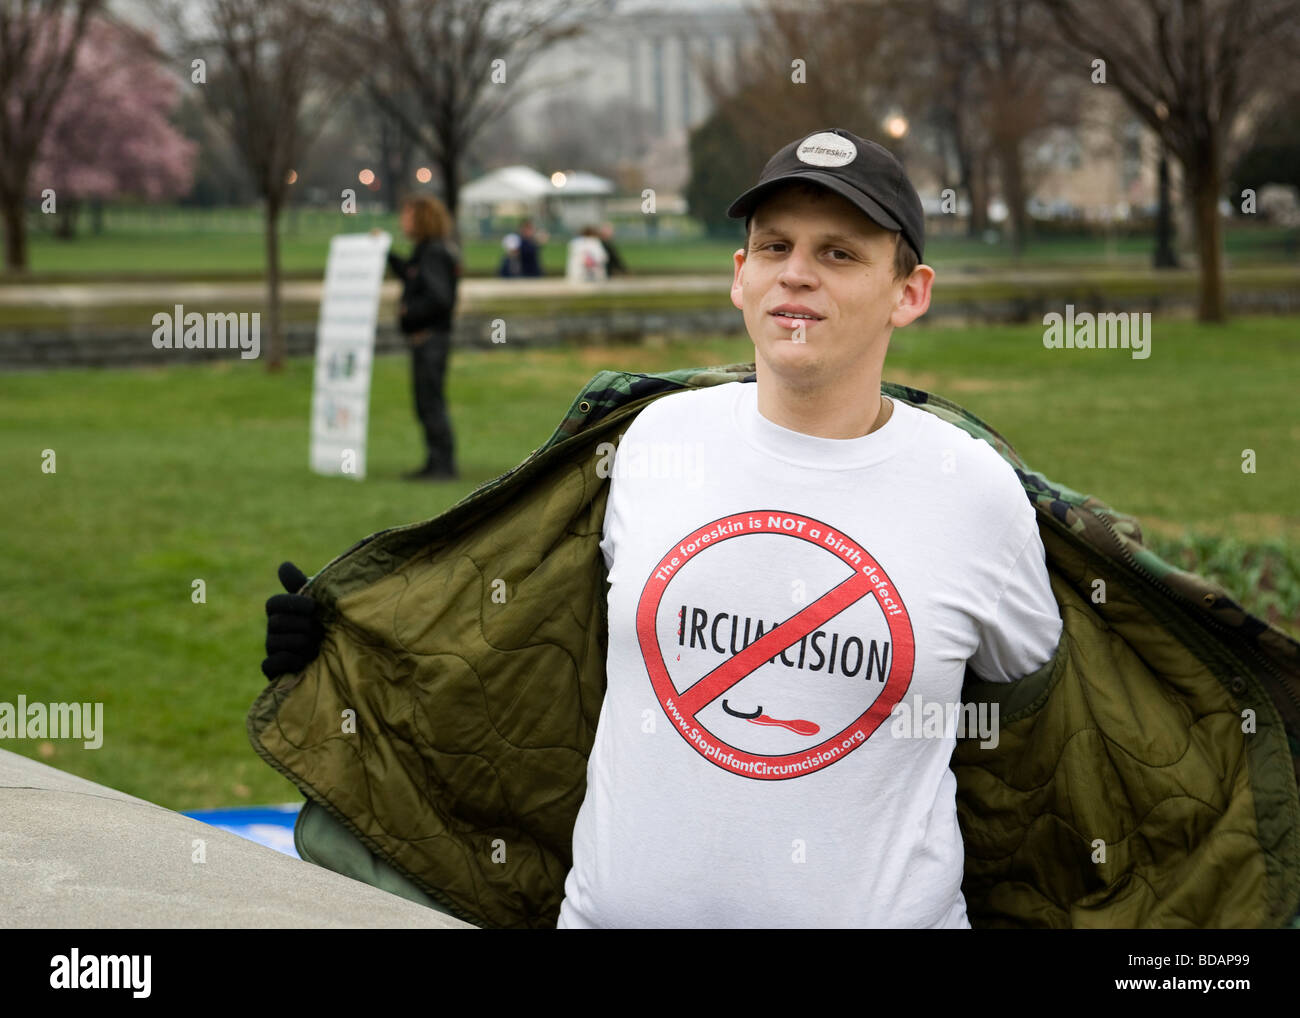 Anti-circumcision movement lobbyist - Washington, DC USA Stock Photo